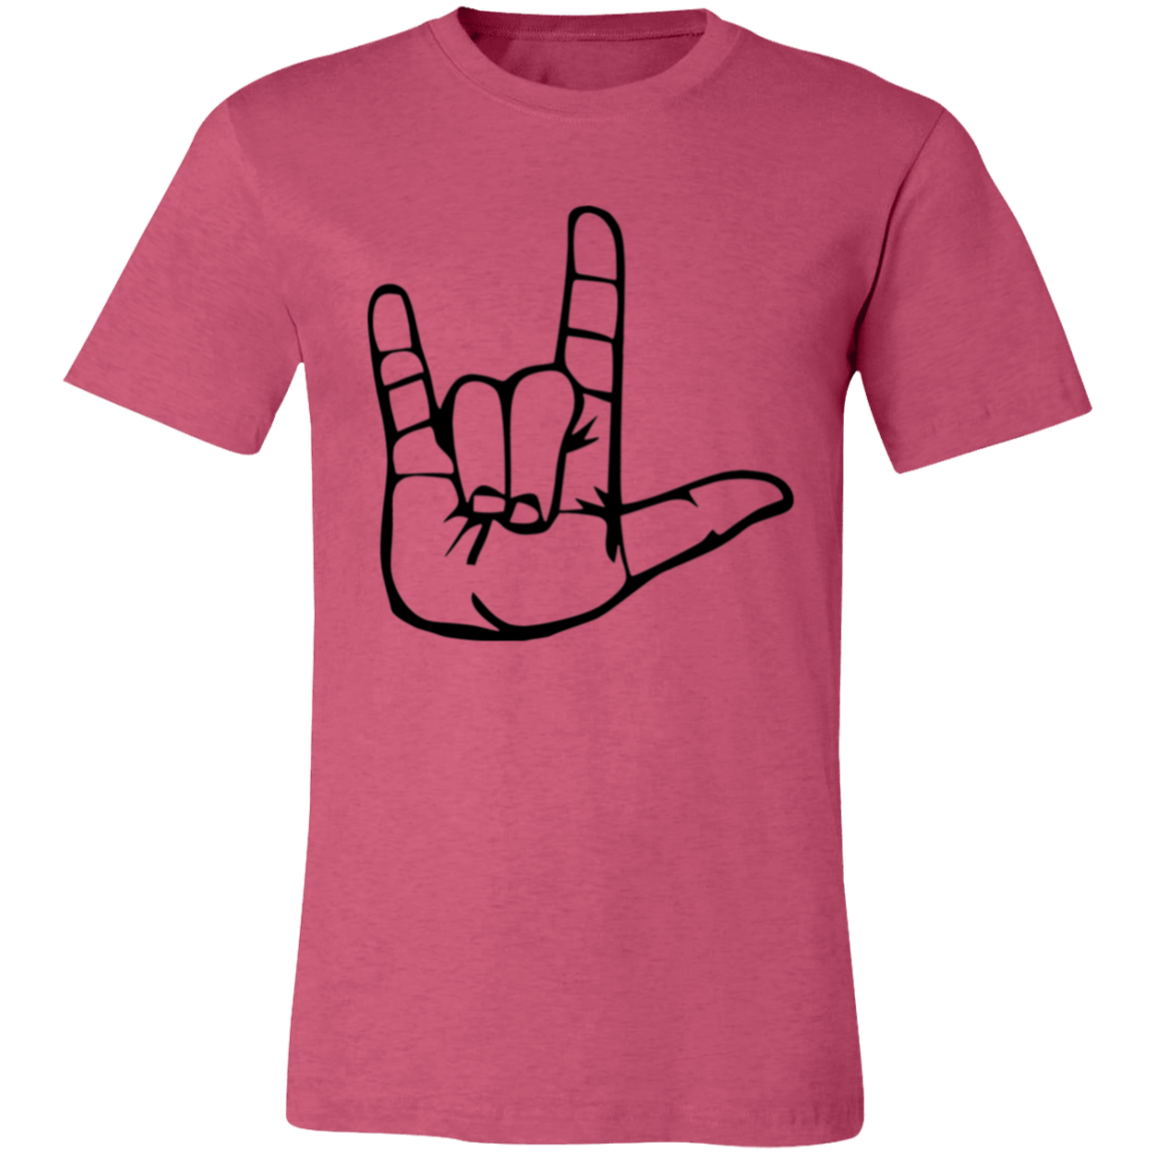 I Love You ASL 3001C Unisex Jersey Short-Sleeve T-Shirt